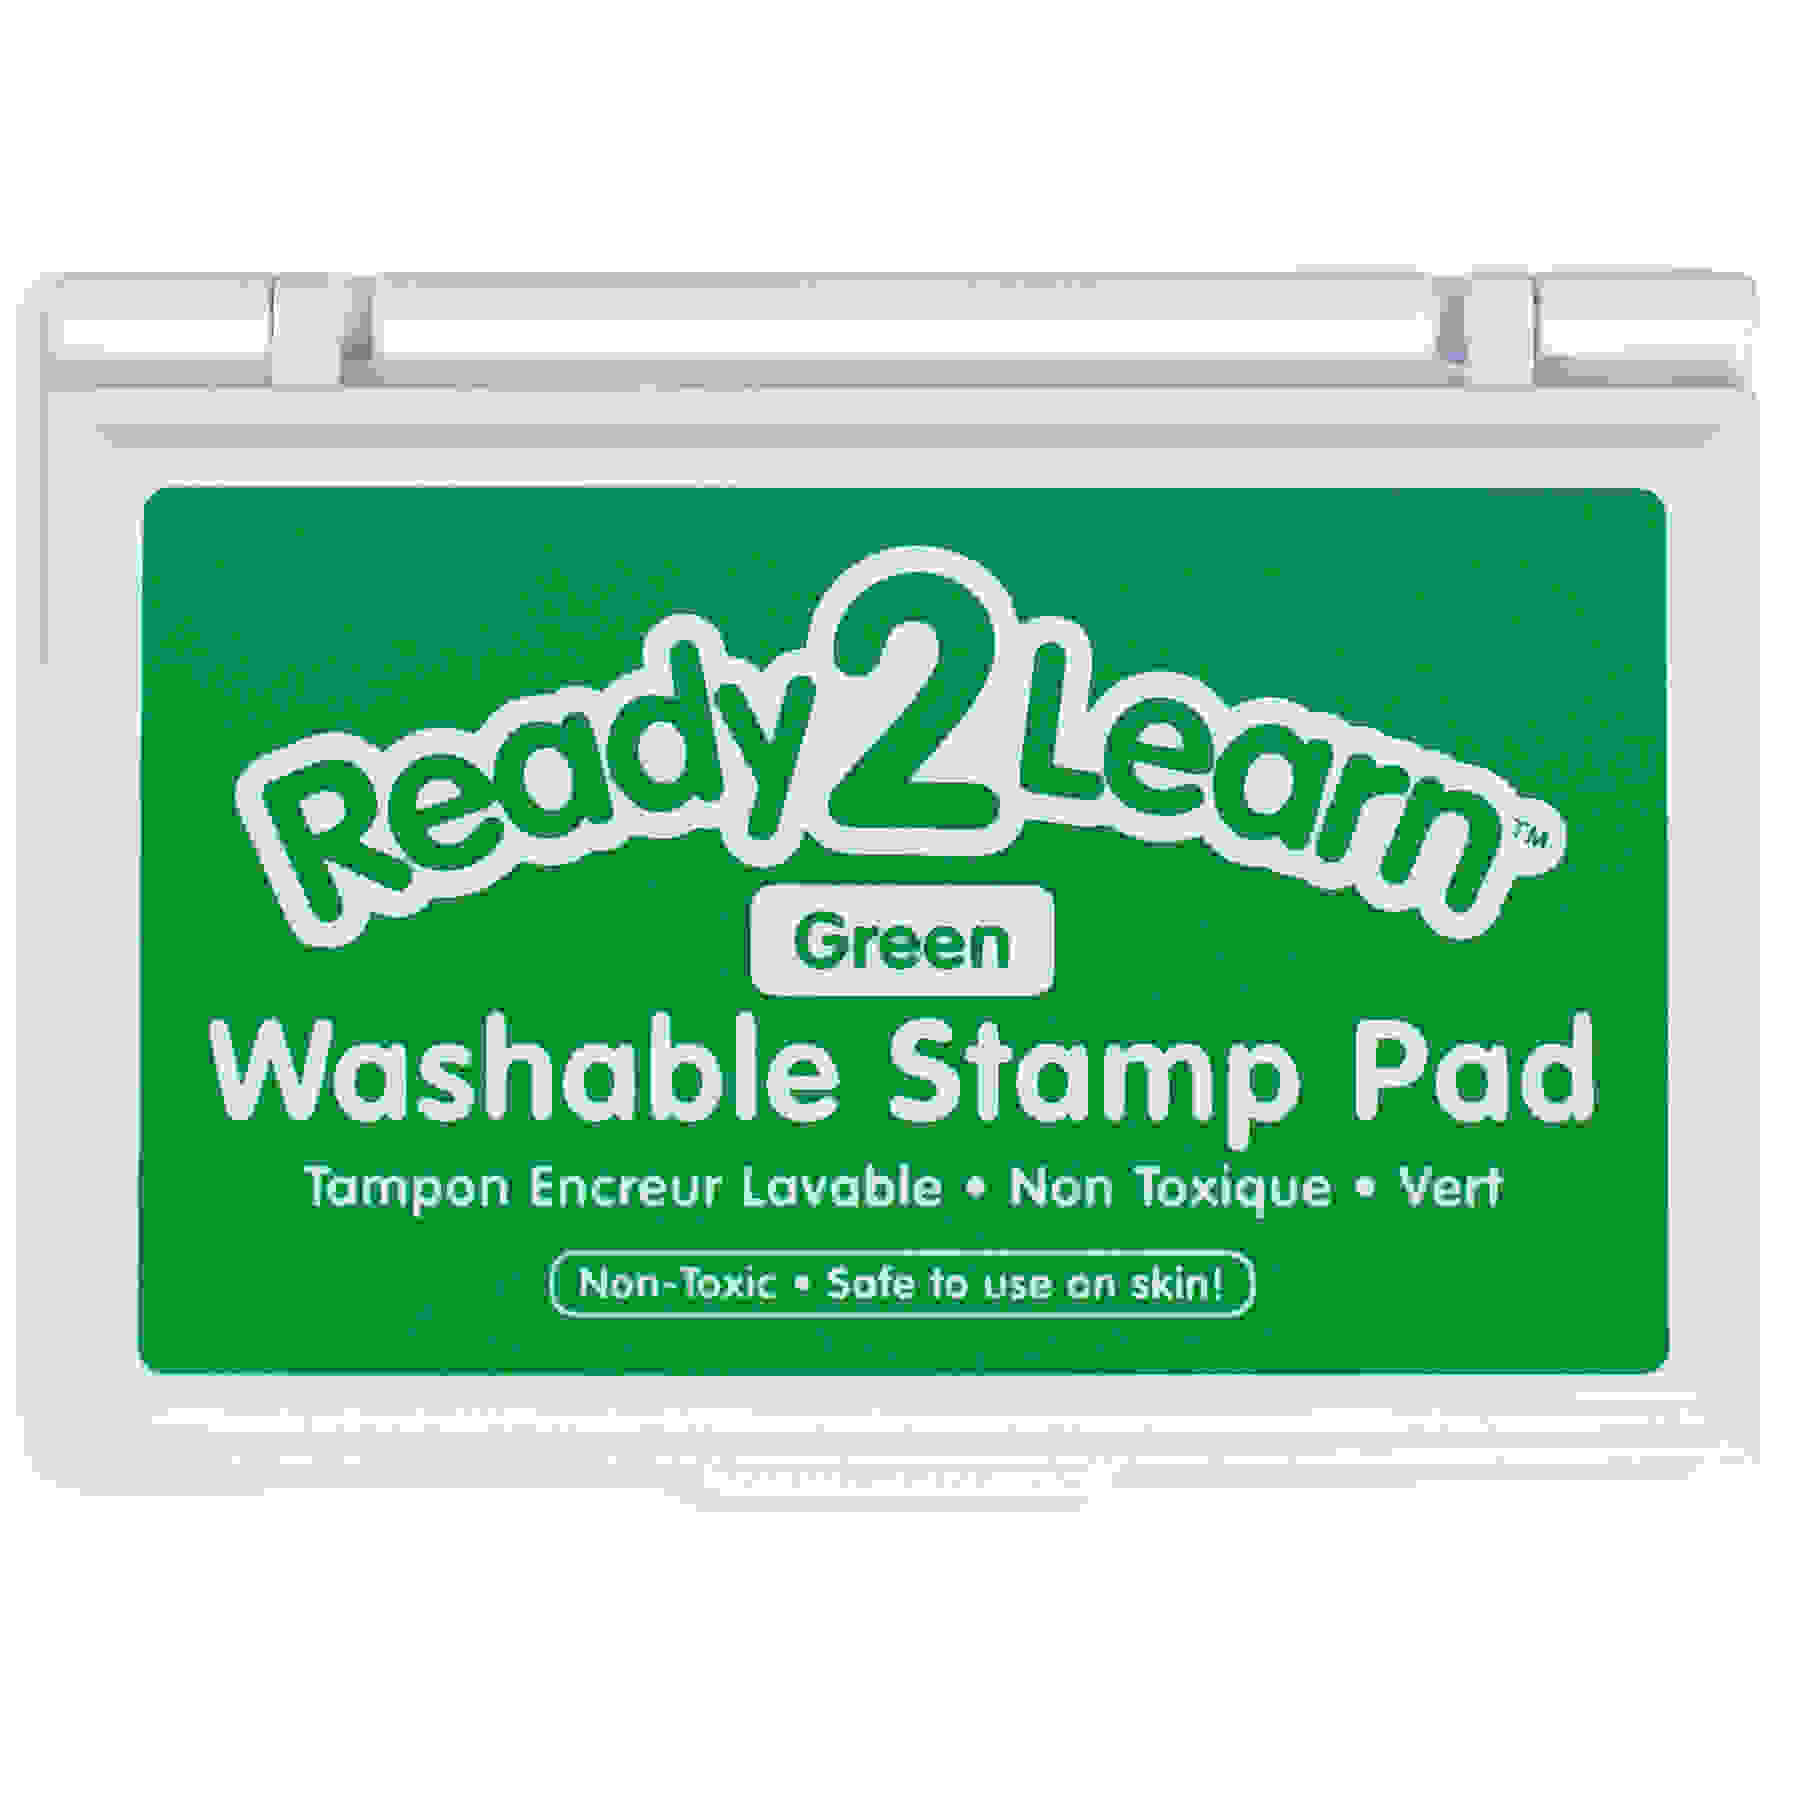 Washable Stamp Pad - Green